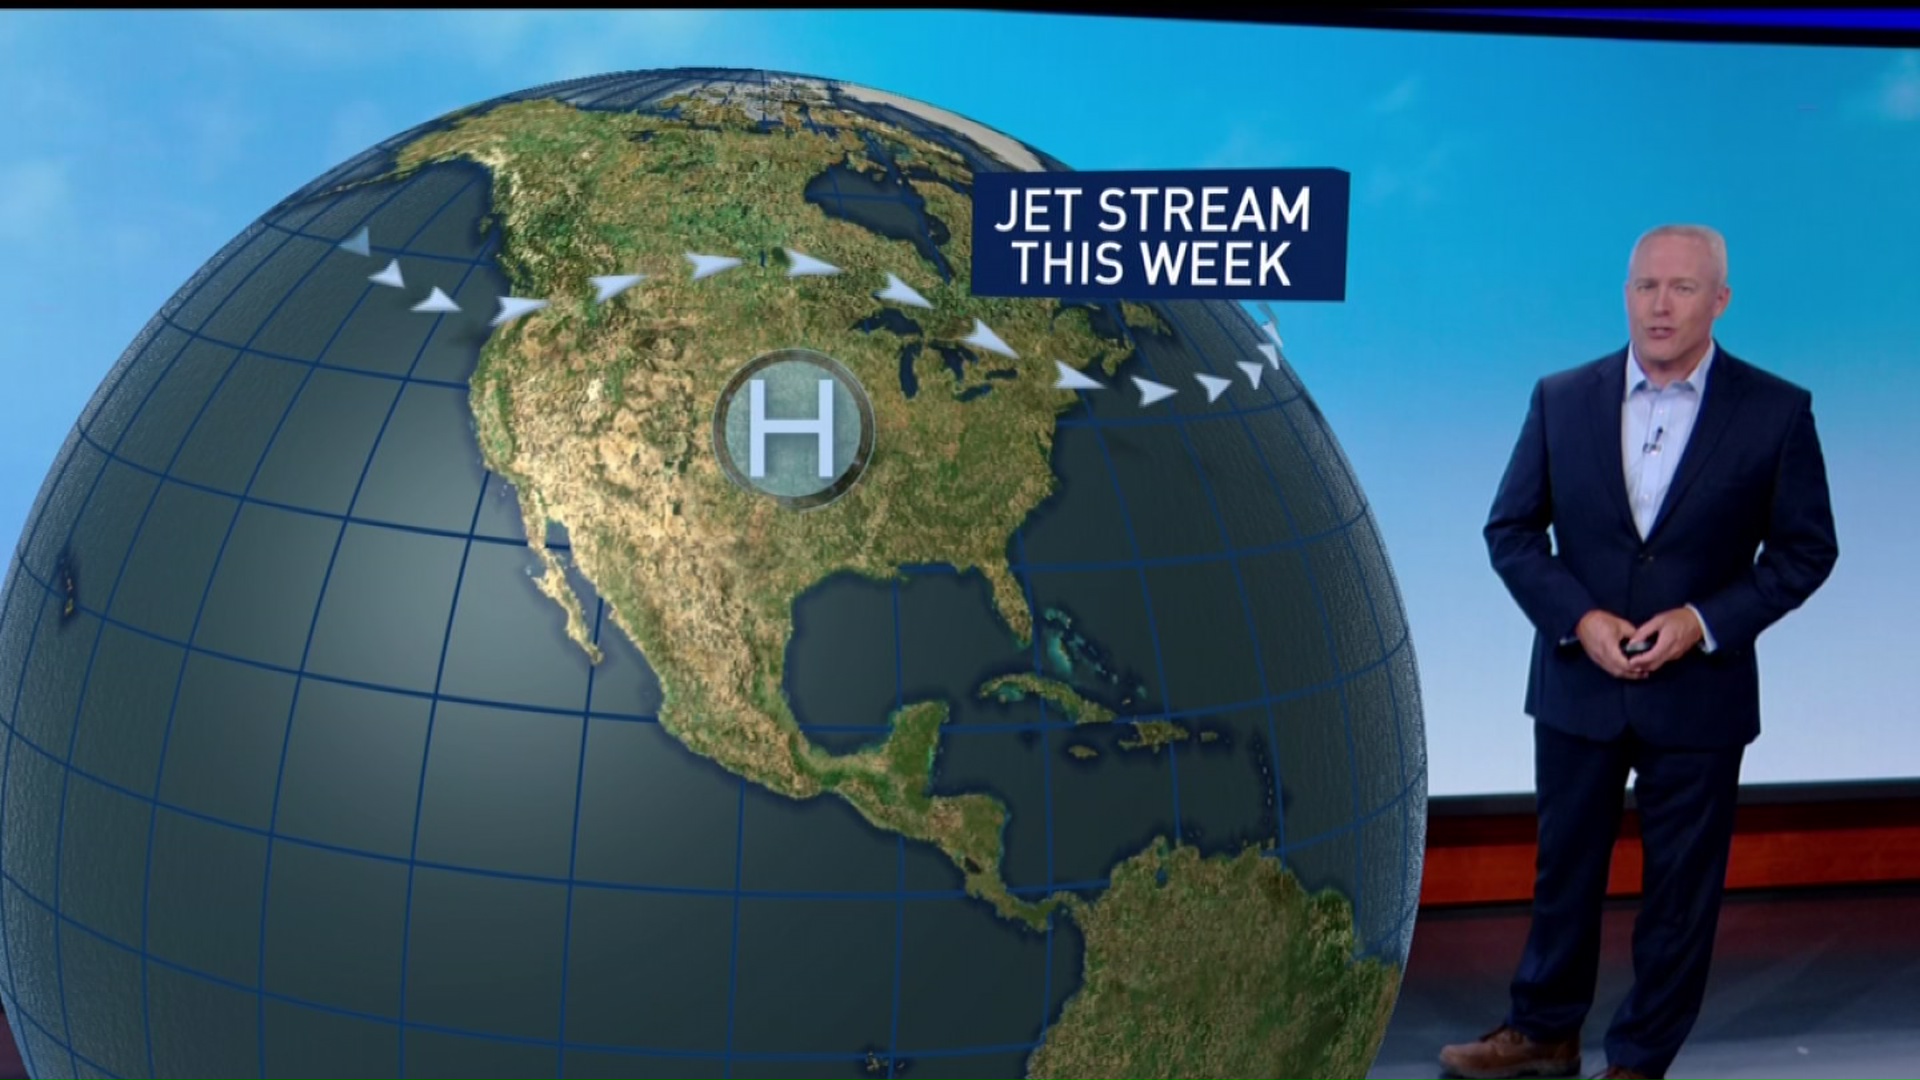 How Jet Stream Helps Create More Heat